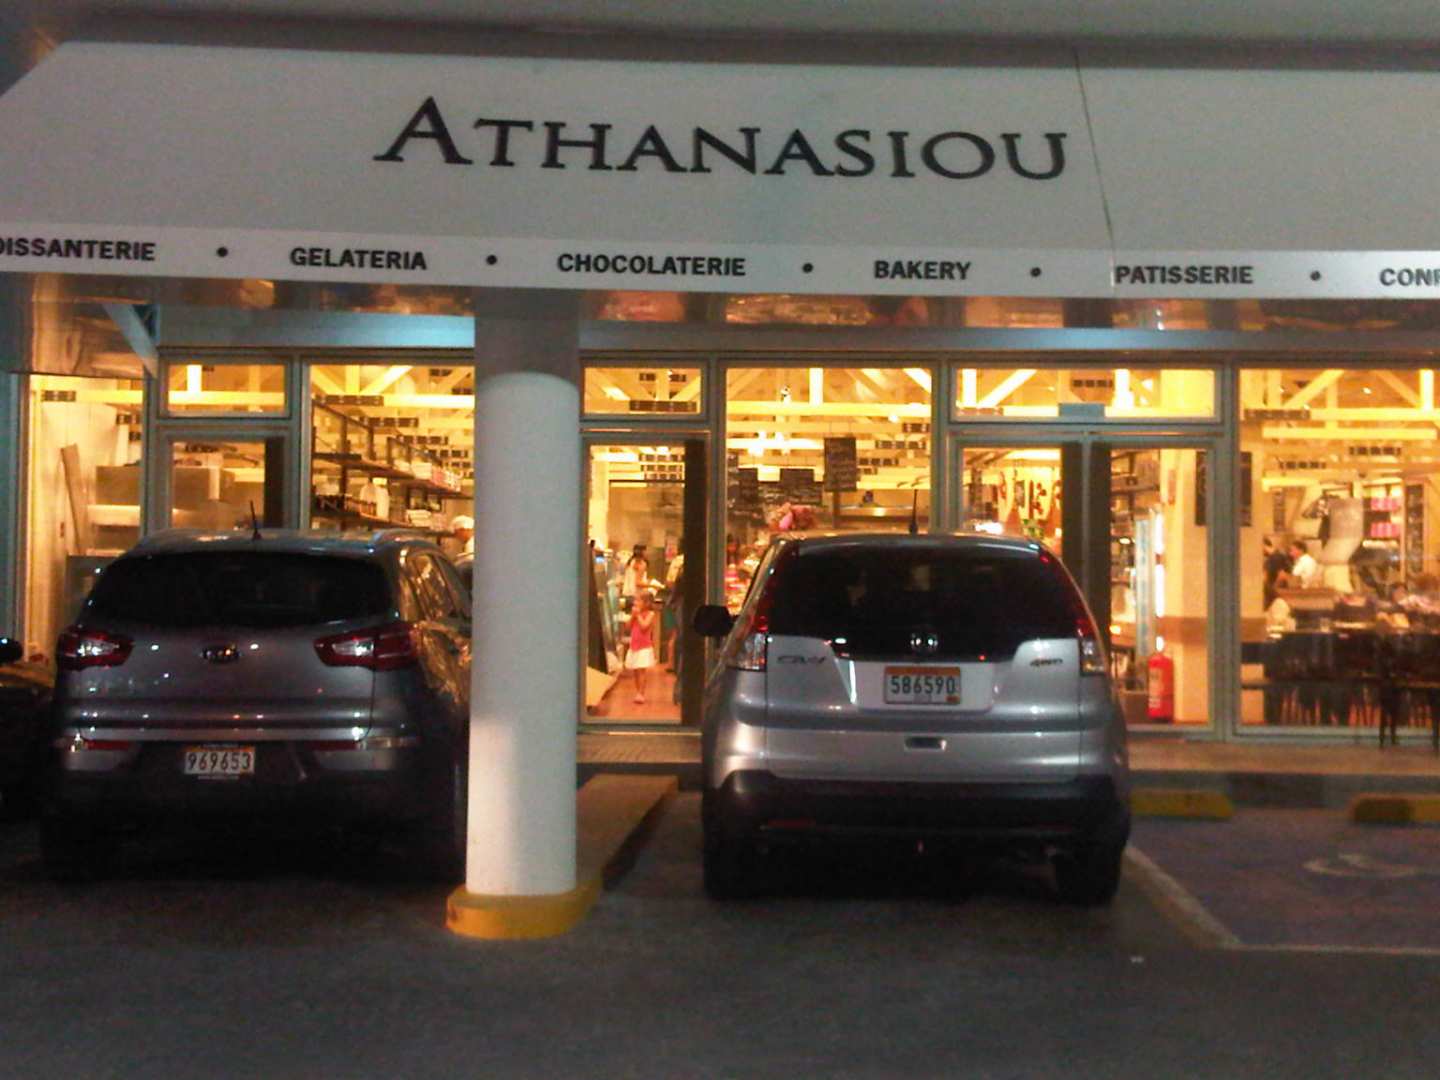 Athanasiou (San Francisco)